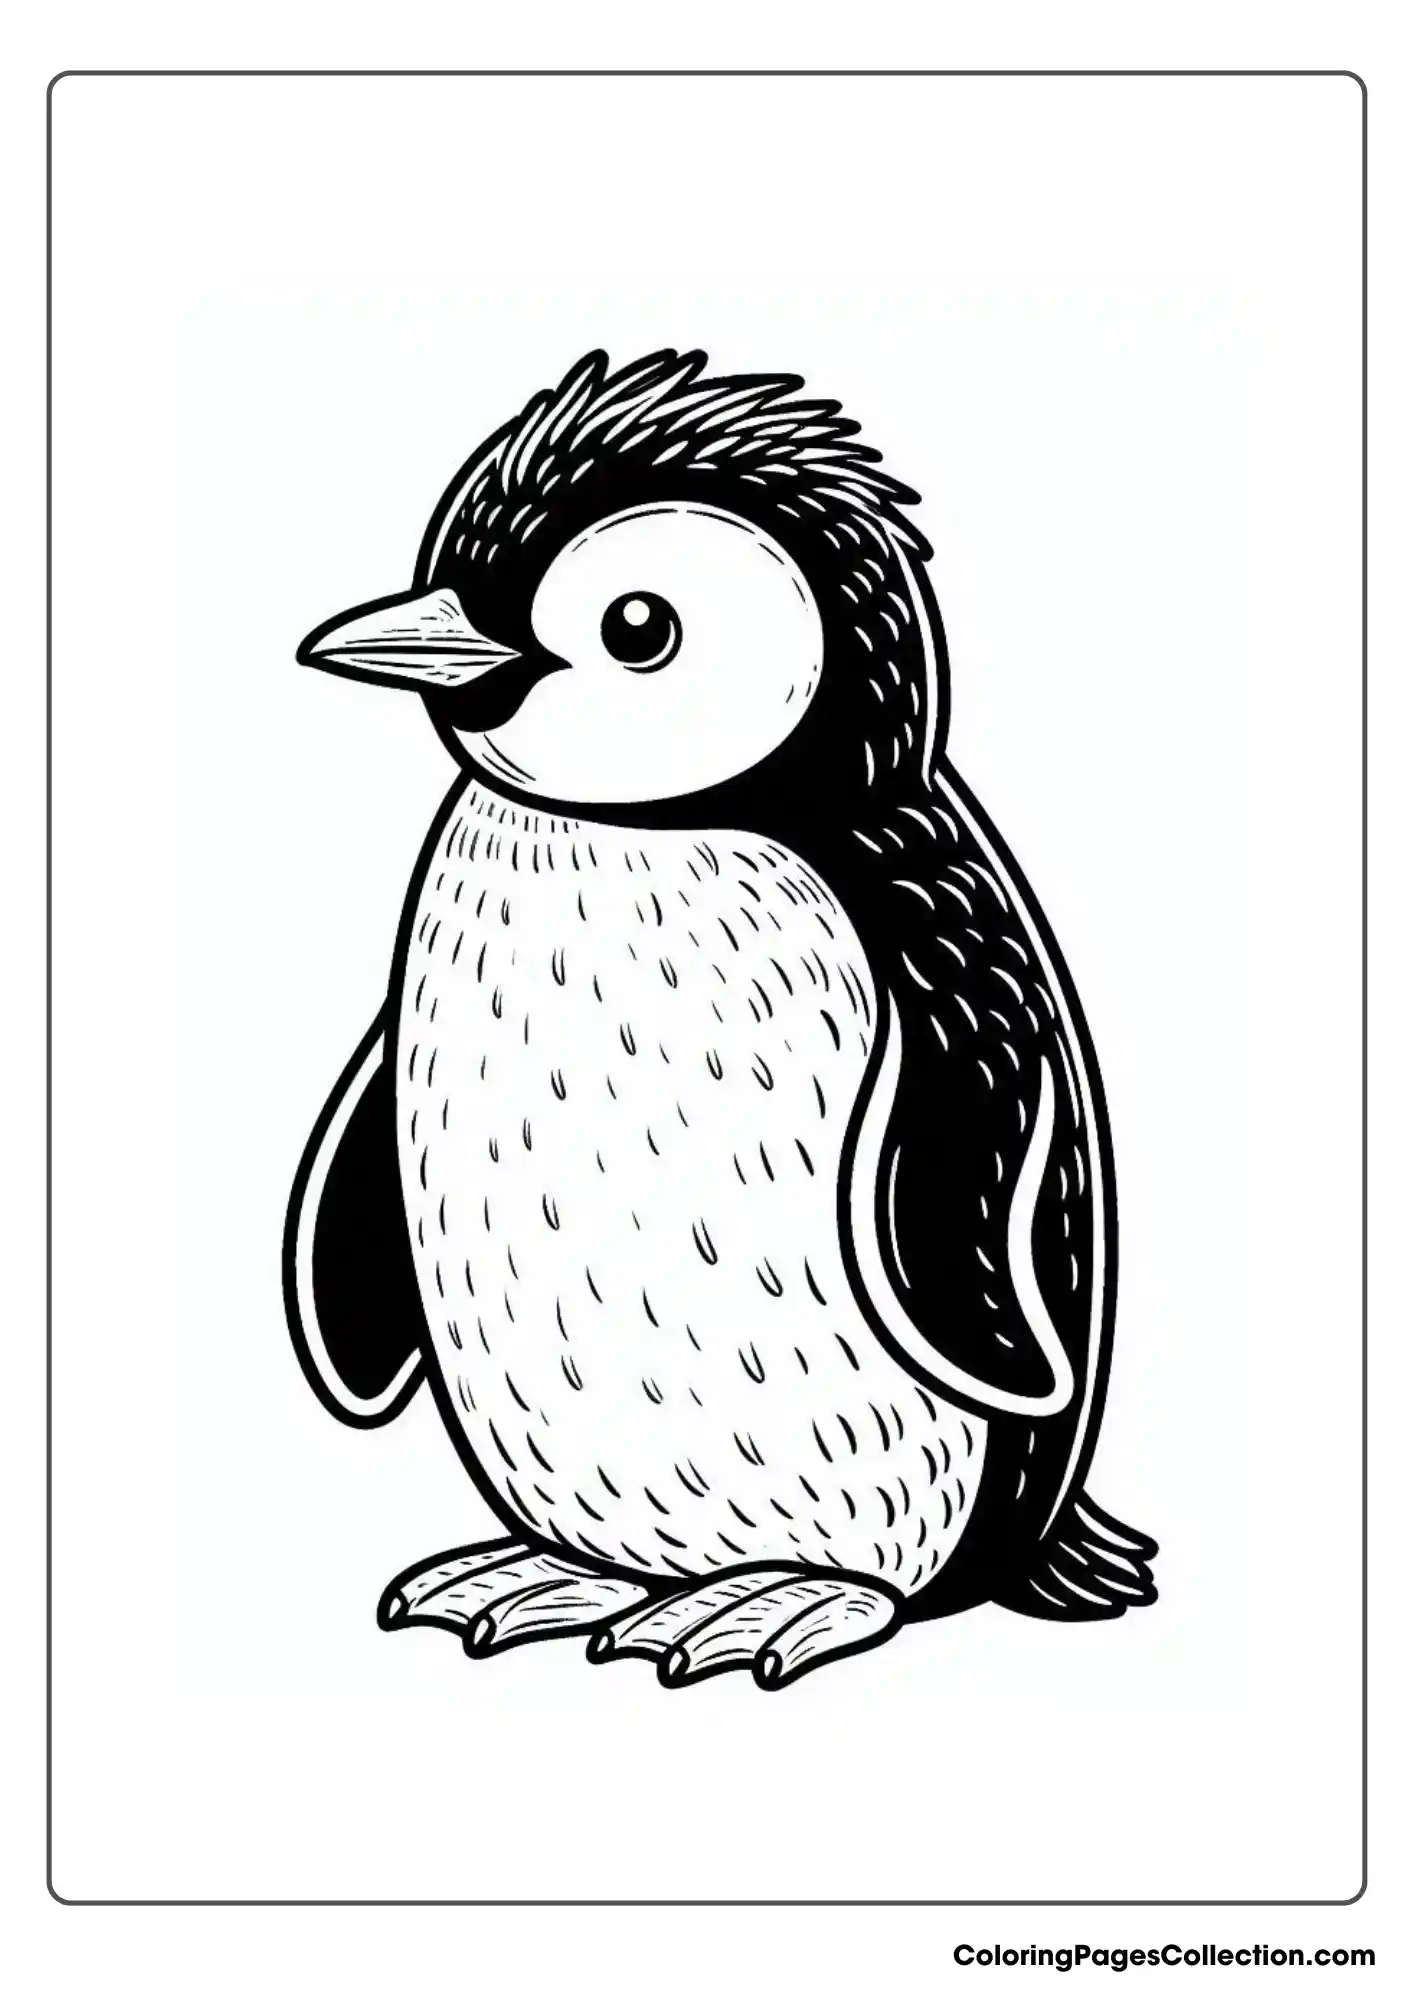 A penguin with a distinct crest